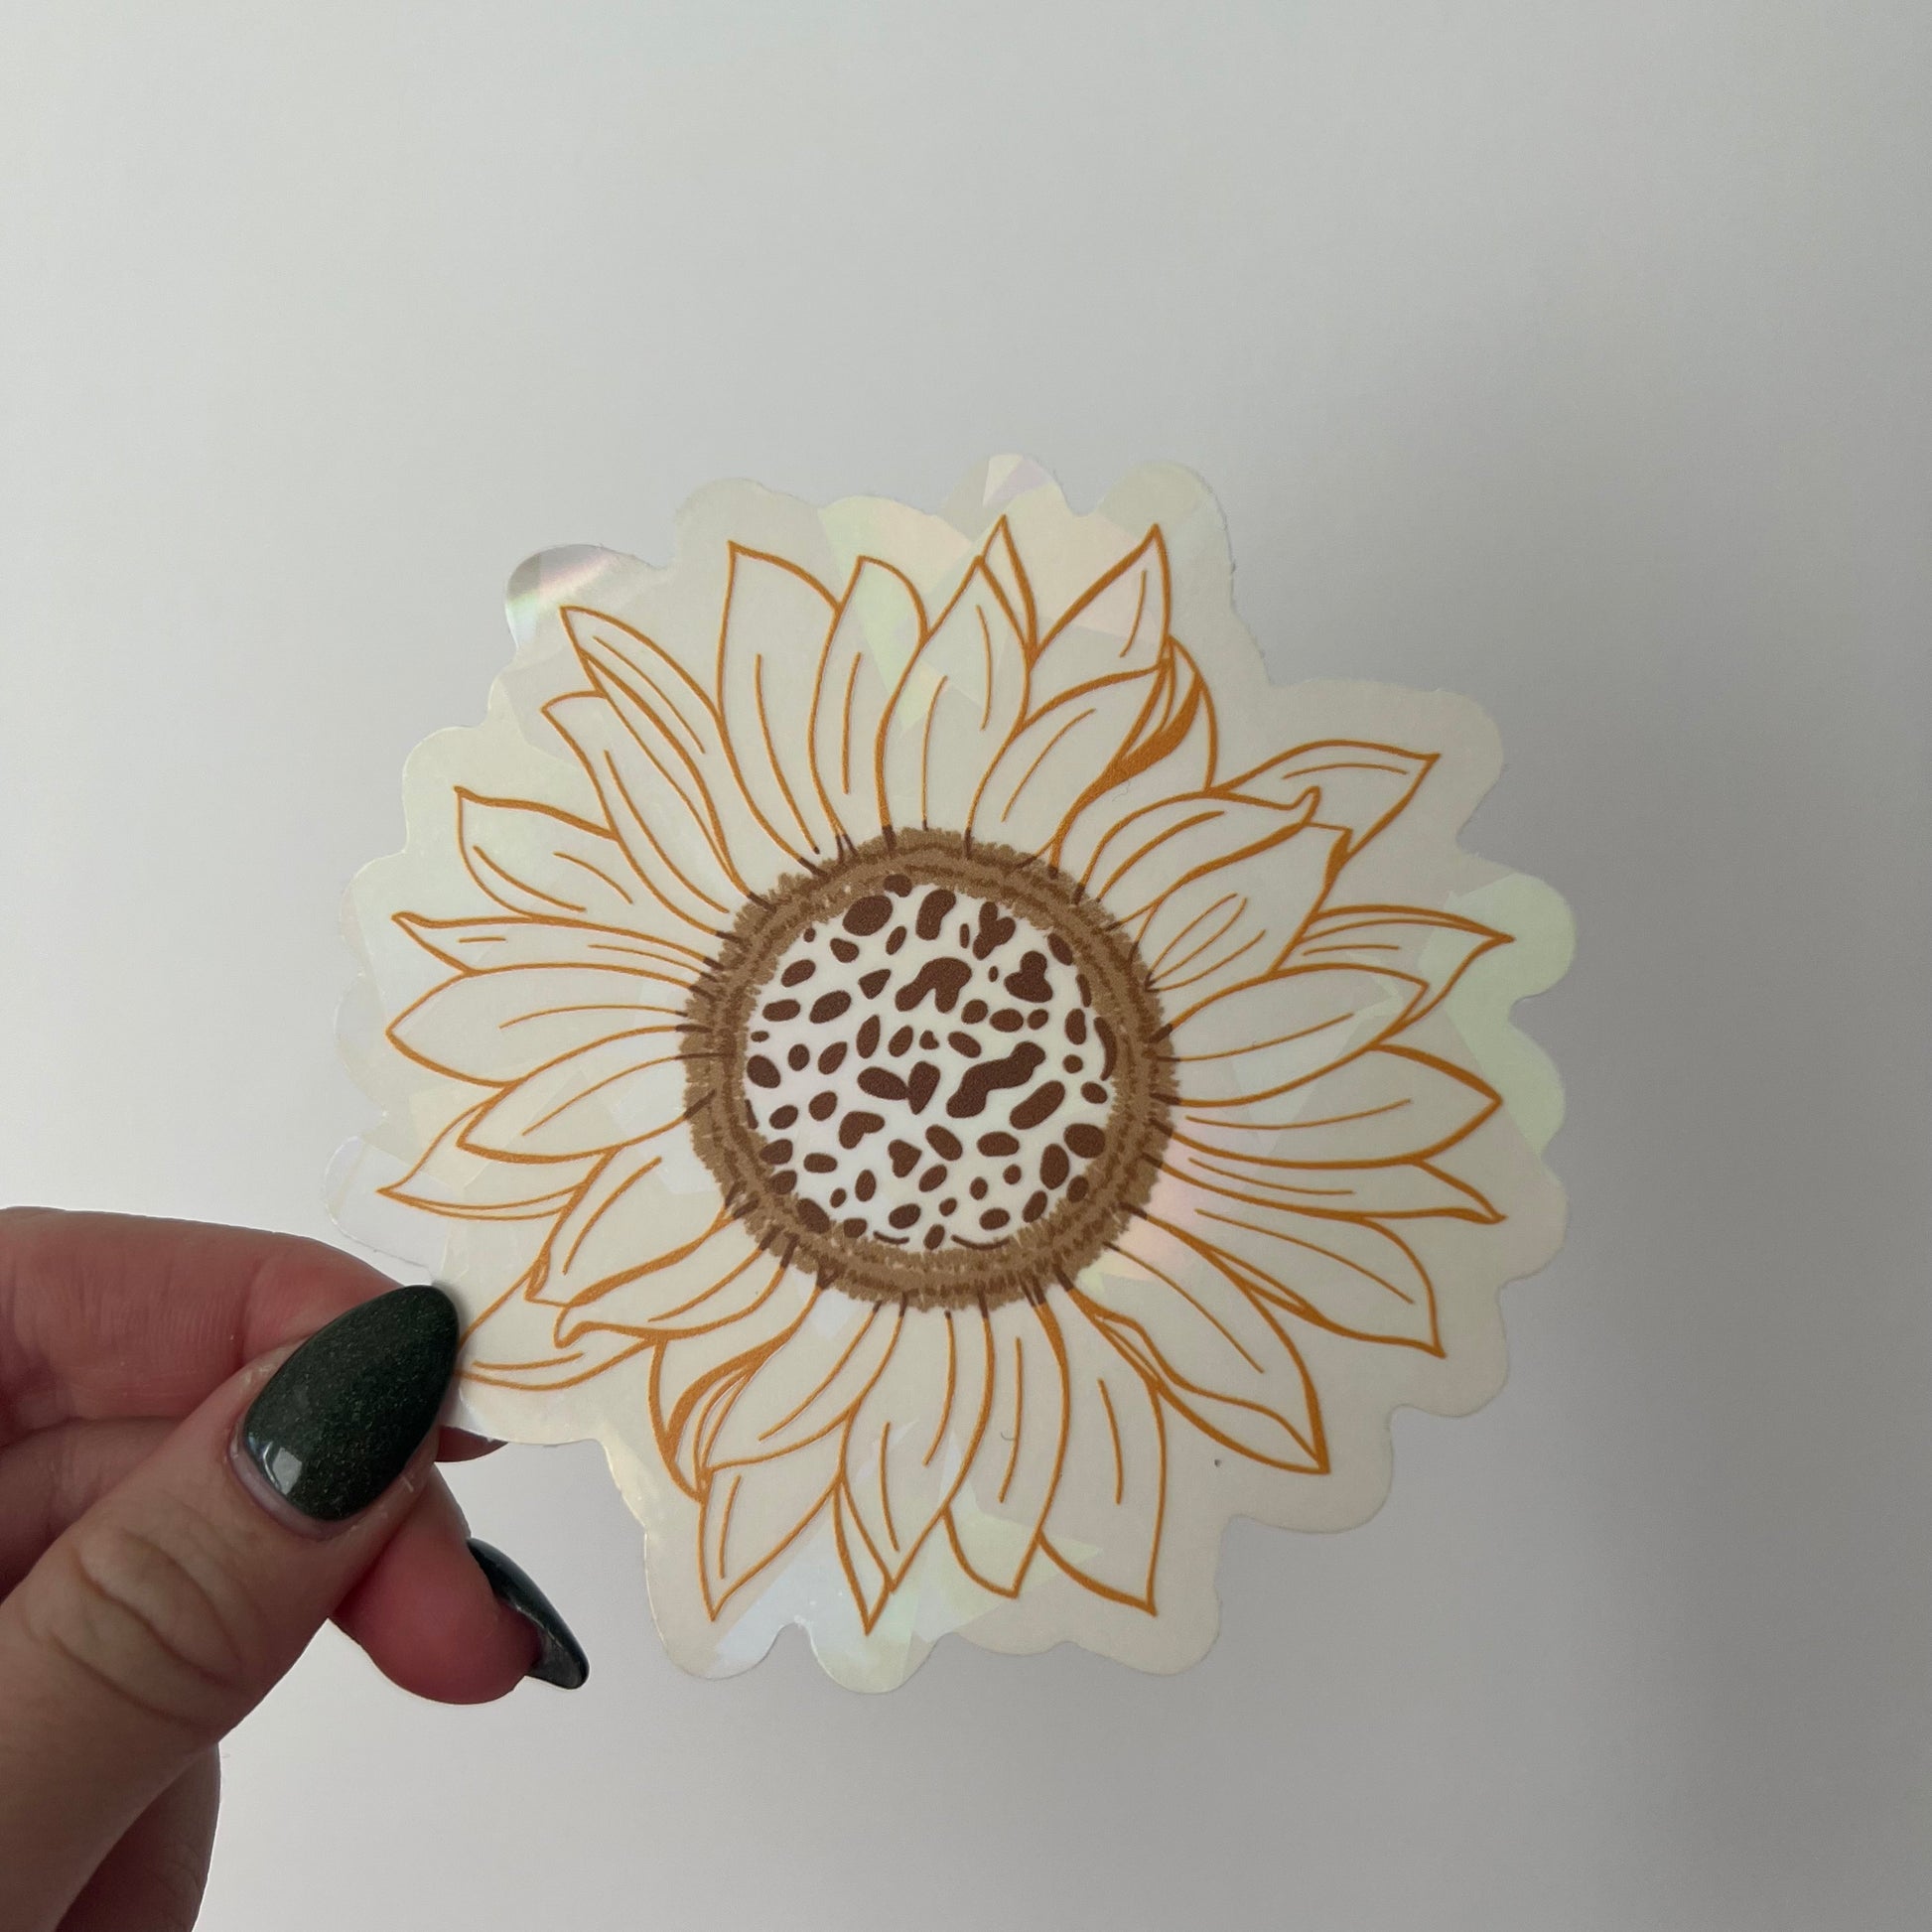 Greenhouse Sun Catcher Decal Sticker - 1canoe2